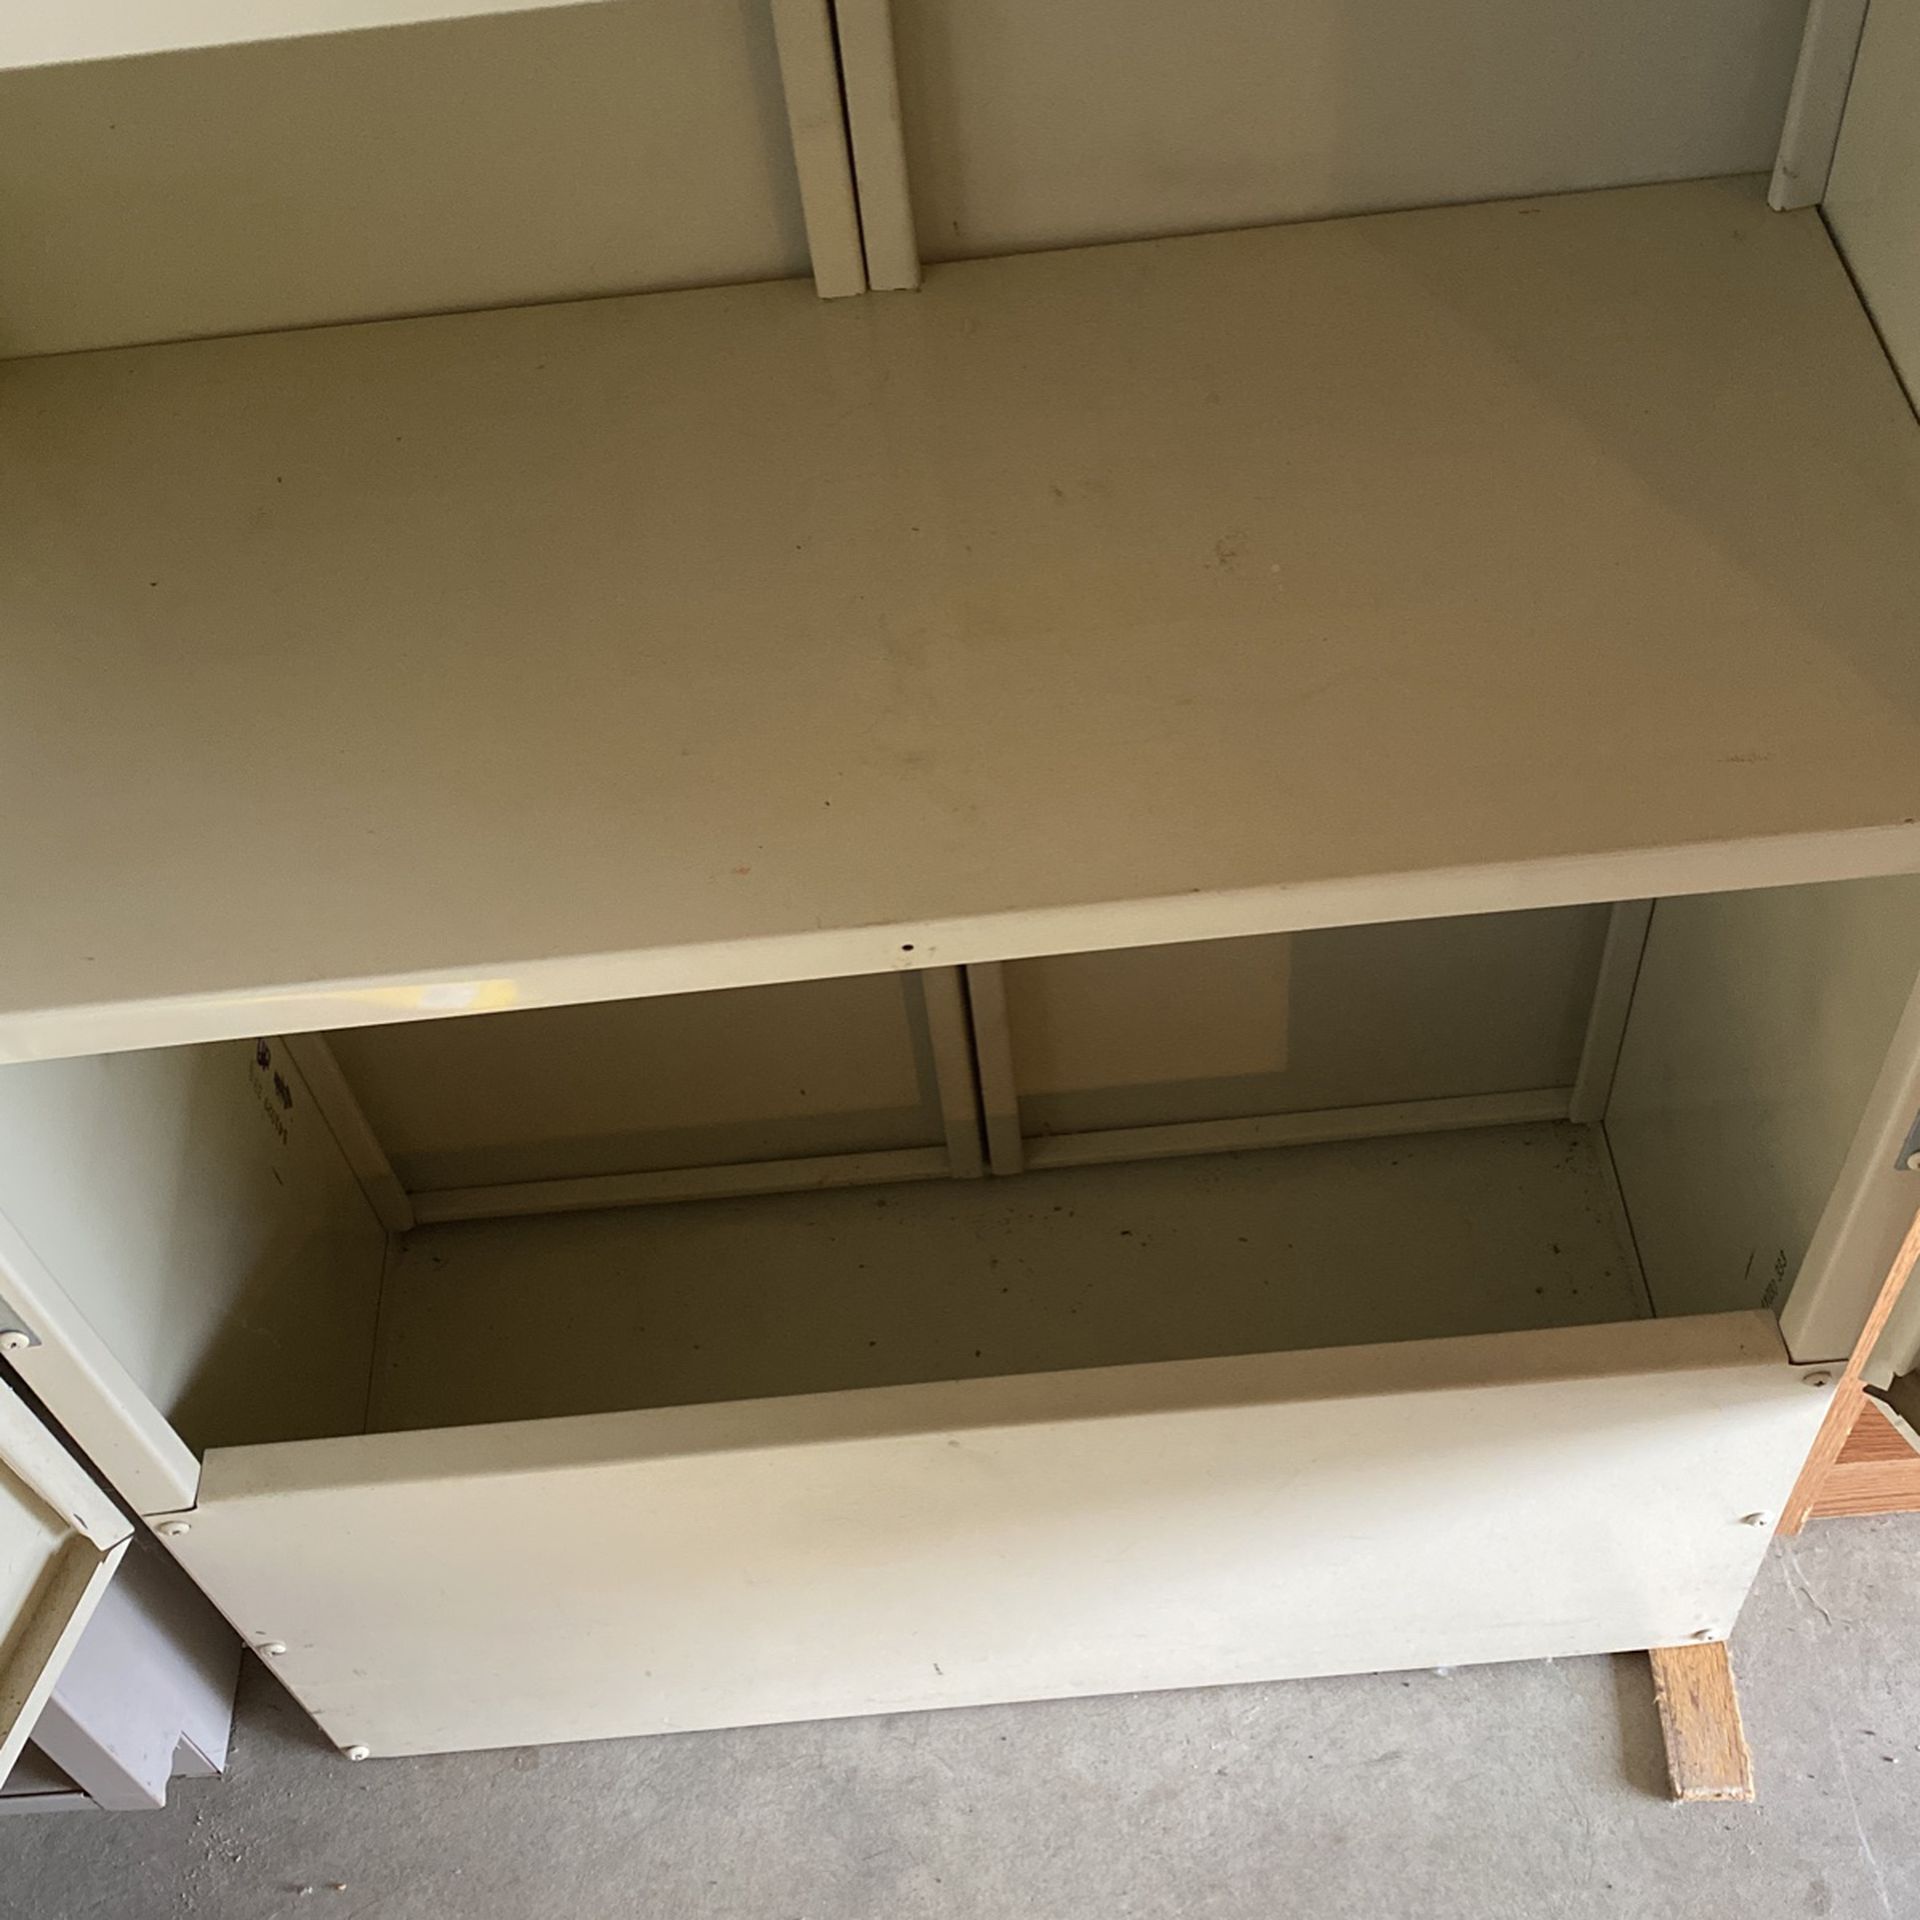 sheves - enclosed 4 shelves unit, metal